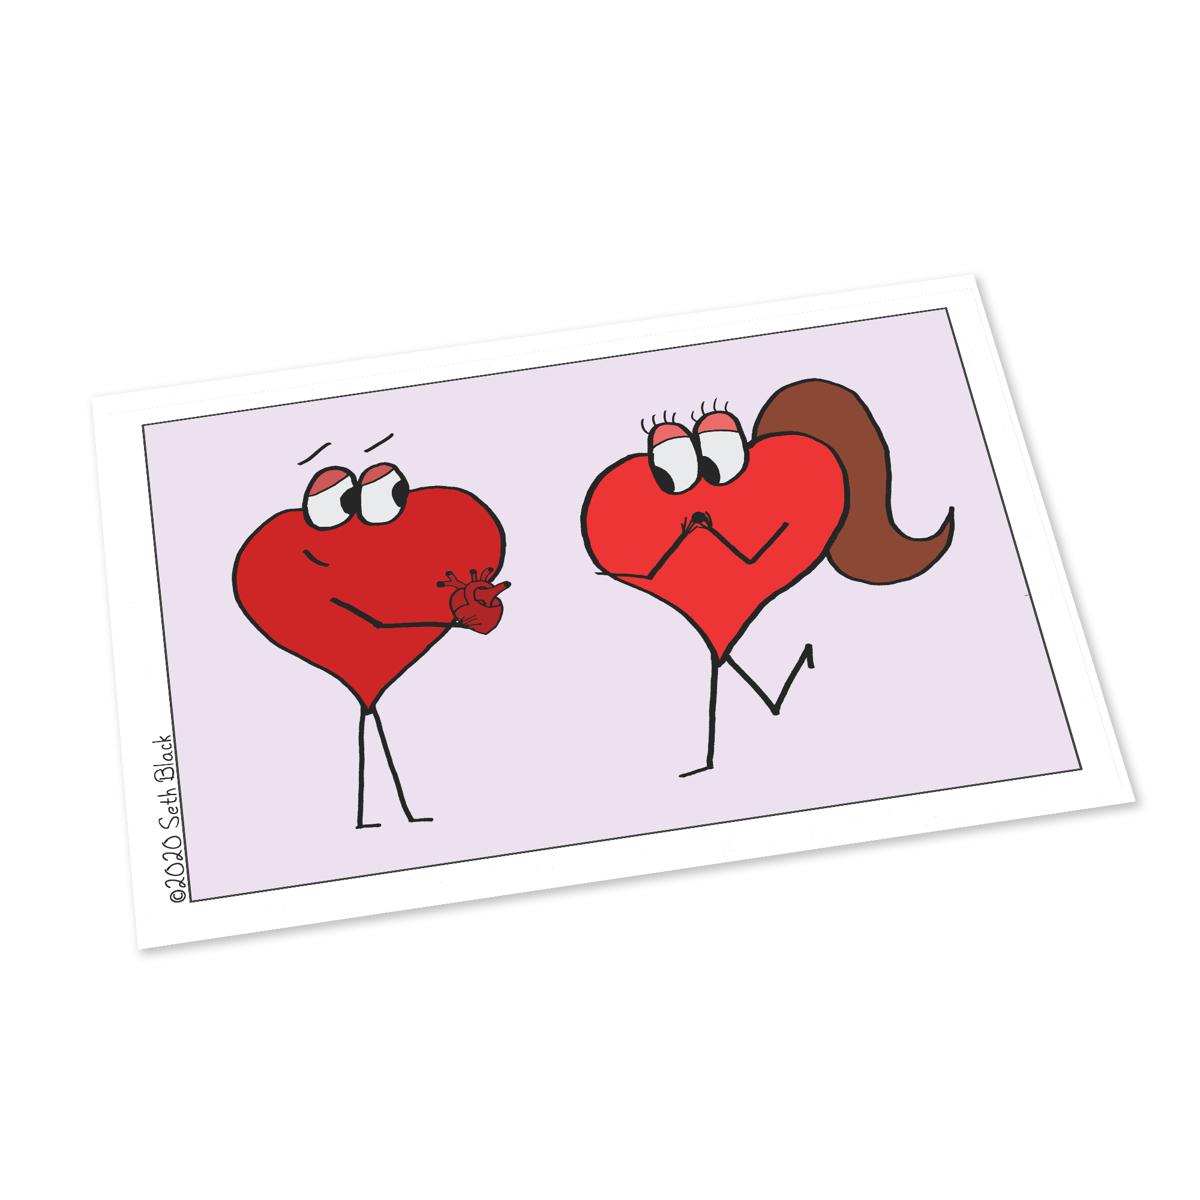 Heart Giving Heart - Valentine's Day 2020 Postcard 4X6 white